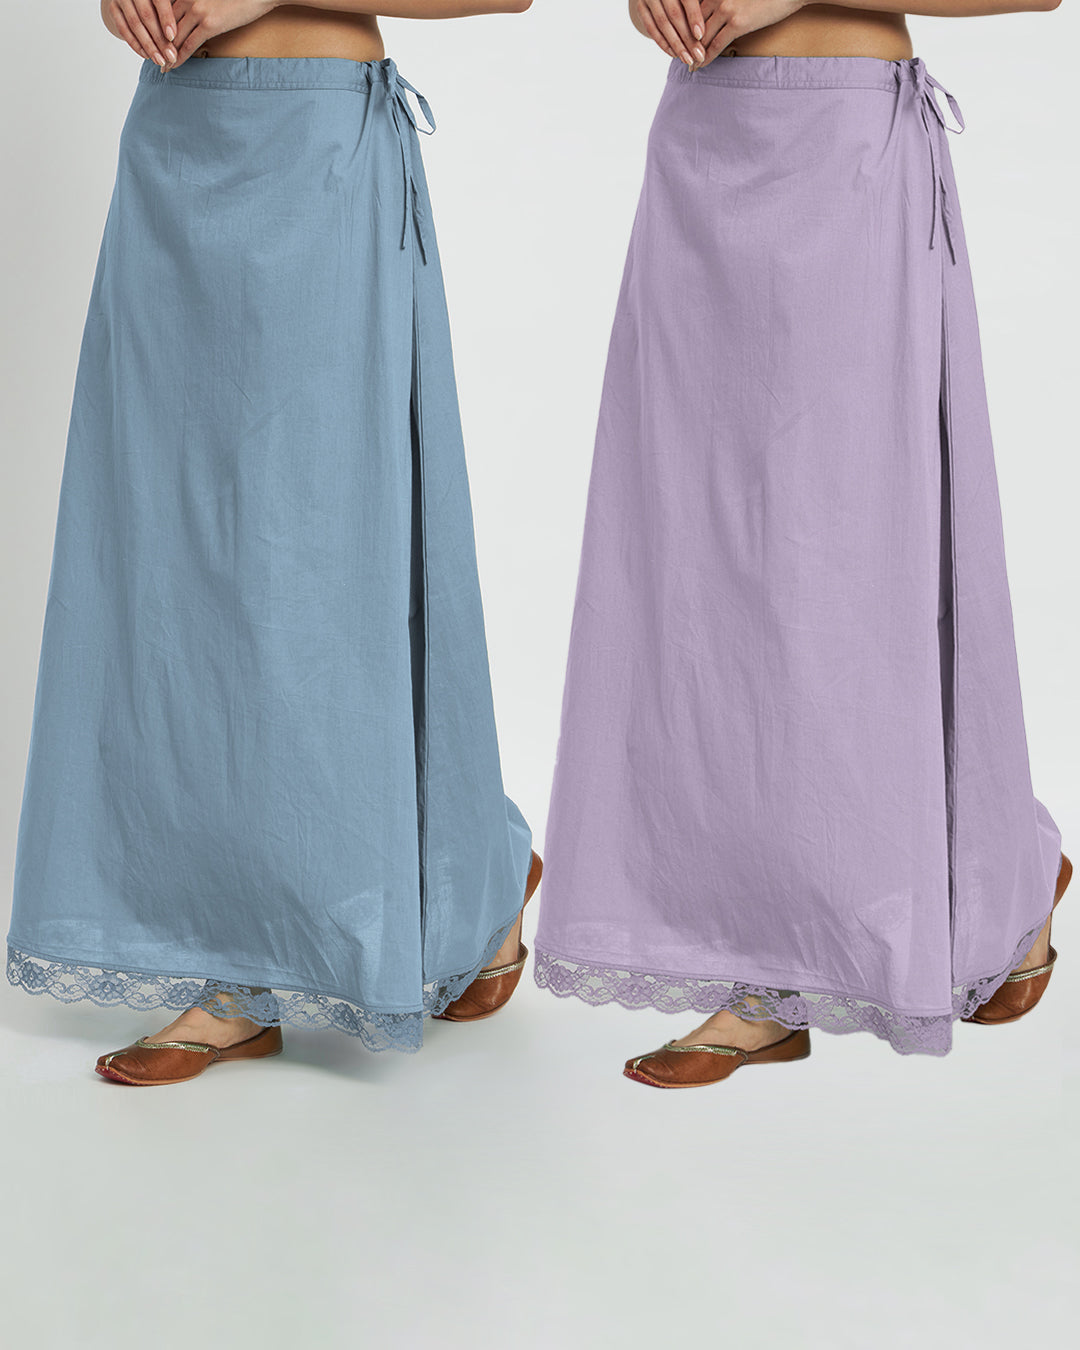 Combo: Blue Dawn & Lilac Lace Medley Peekaboo Petticoat- Set of 2